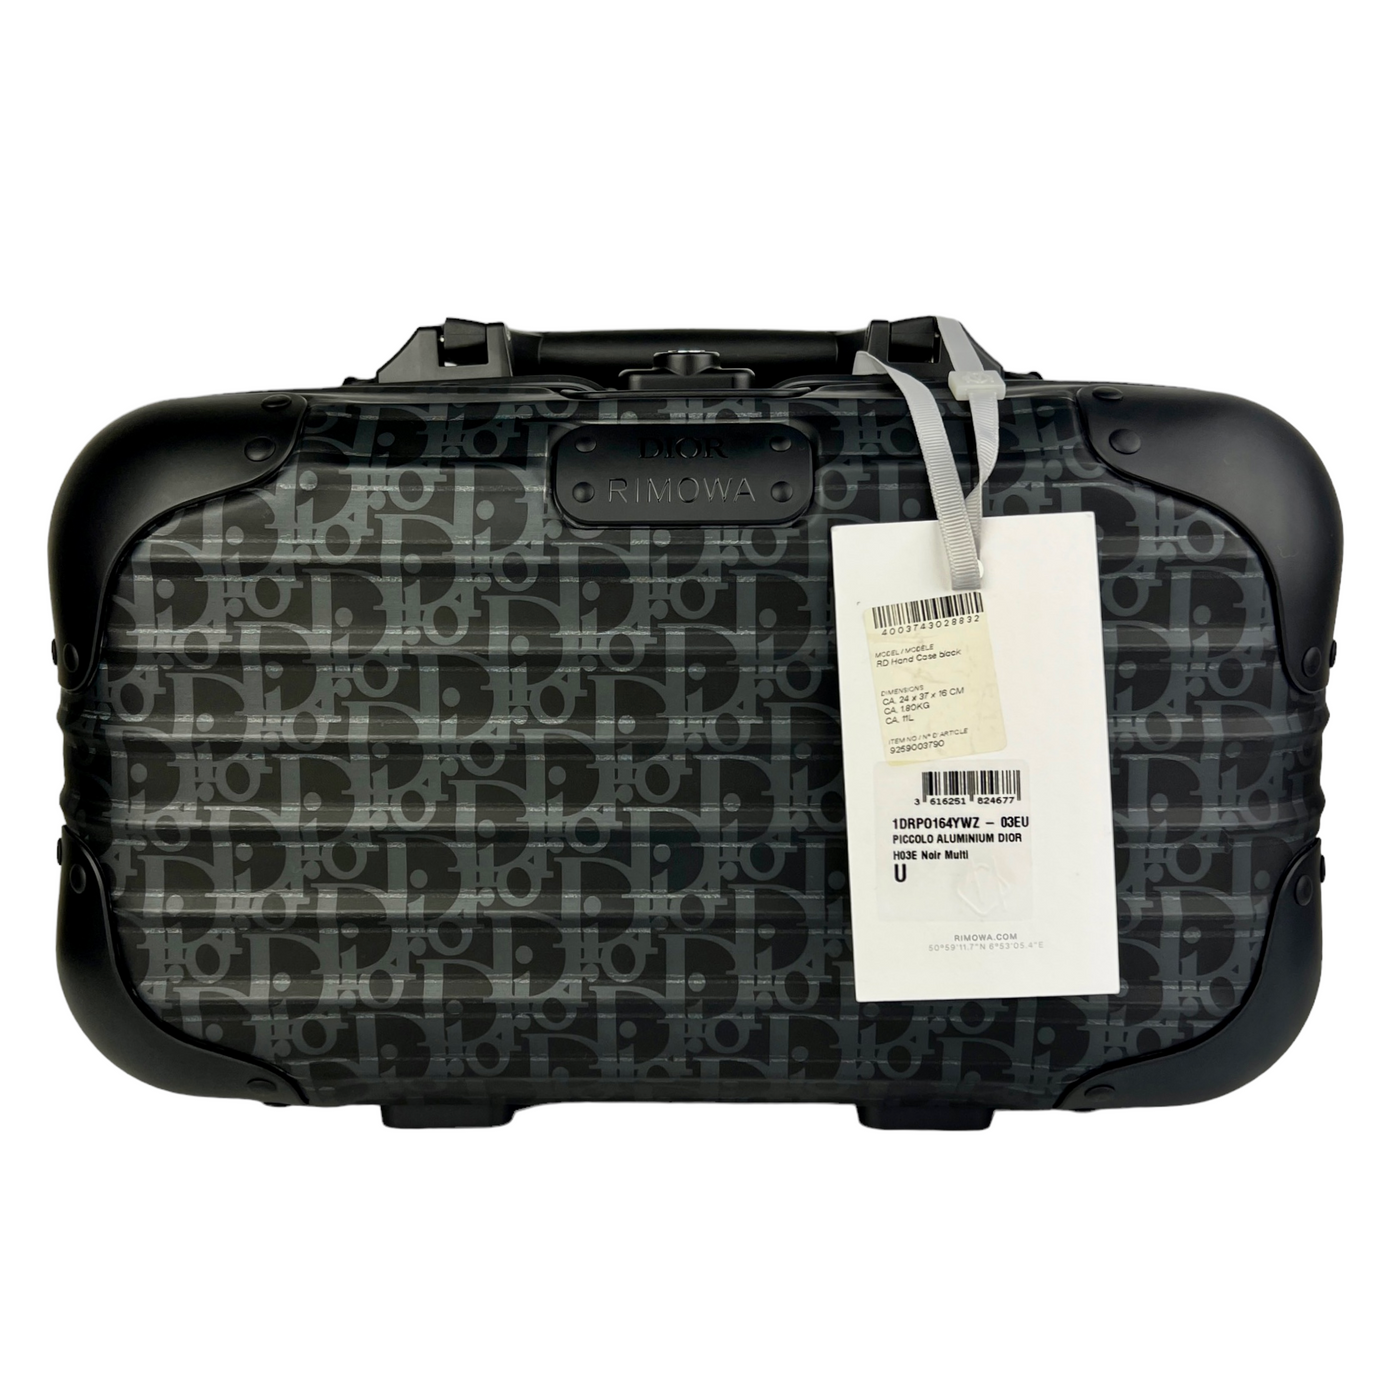 DIOR 2DRCA295YWT Rimowa Collab Wallet Personal Clutch bag 2WAY Travel case   eBay